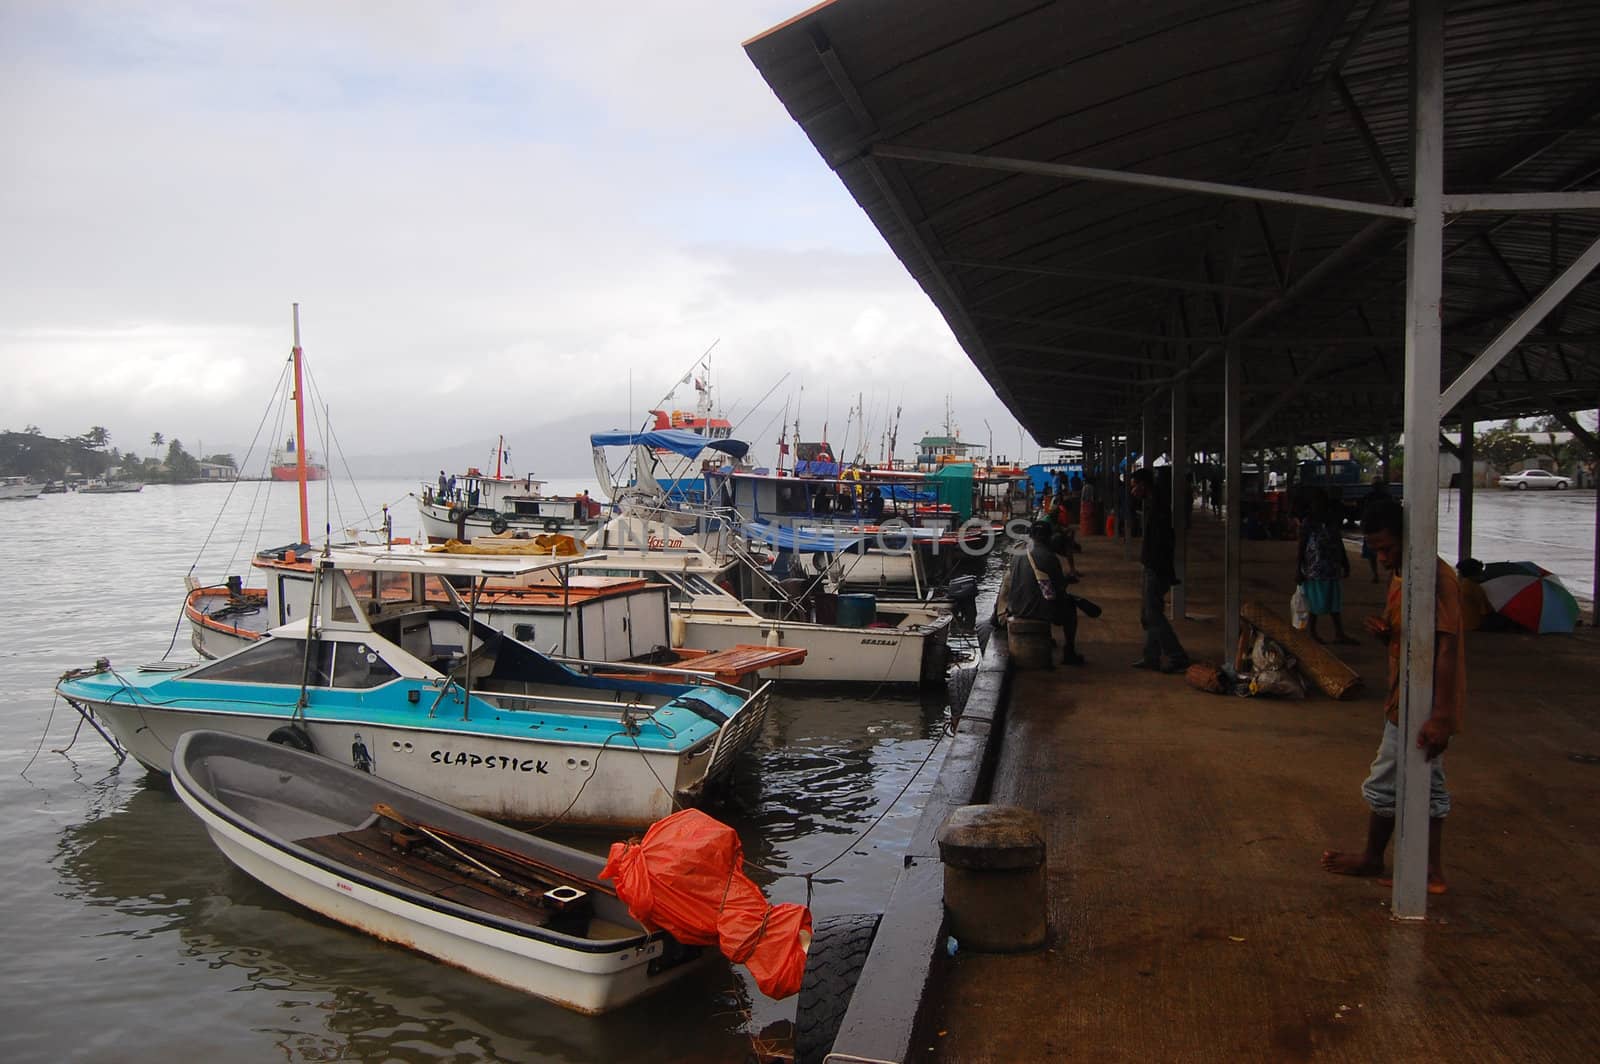 Boats at Alotau port on May 19th, 2011.
Milne Bay Province. Papua New Guinea